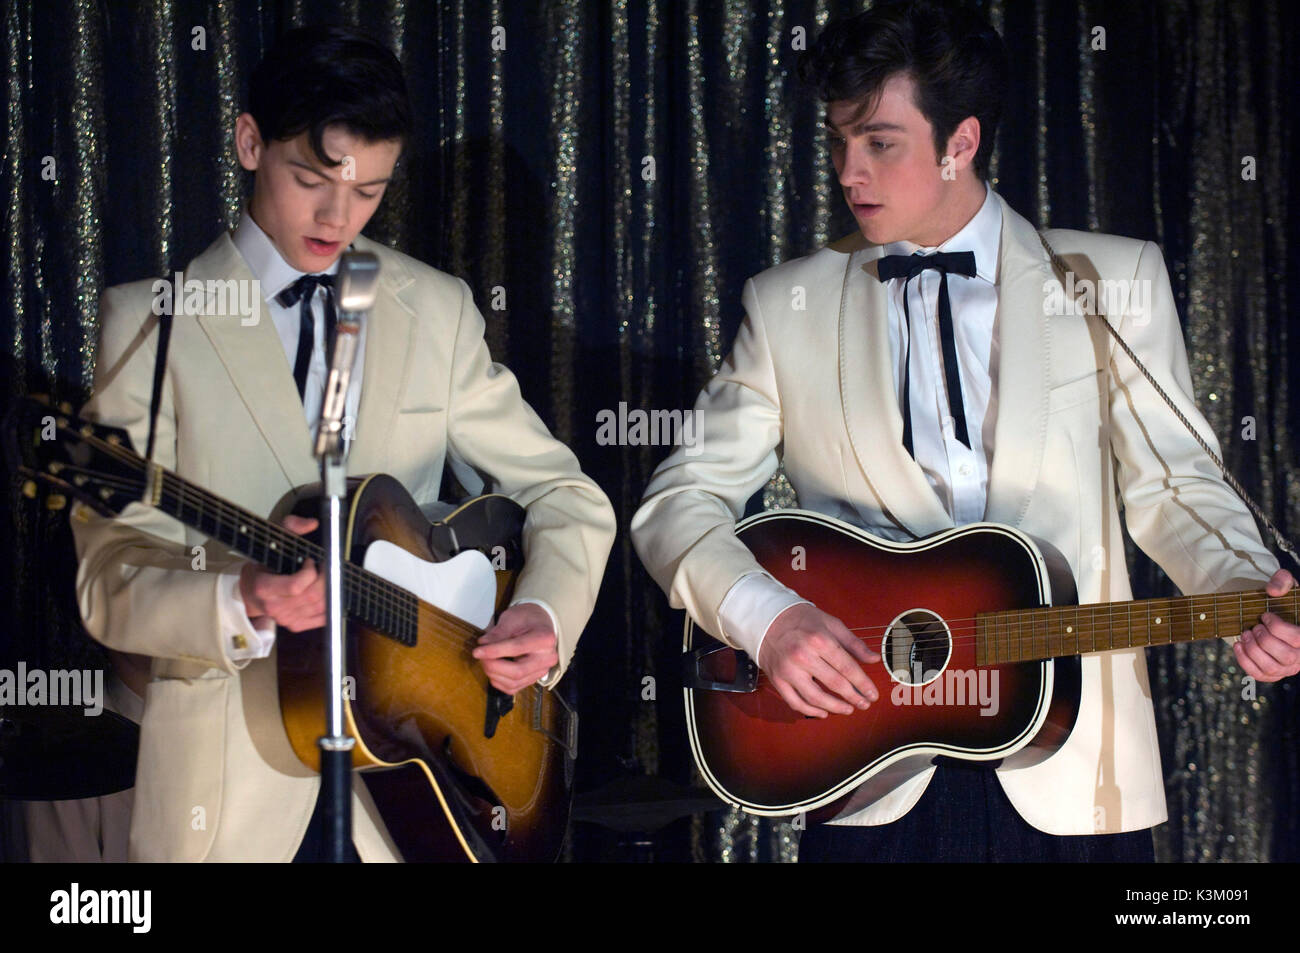 NOWHERE BOY THOMAS SANGSTER as Paul McCartney, AARON JOHNSON as John Lennon       Date: 2009 Stock Photo